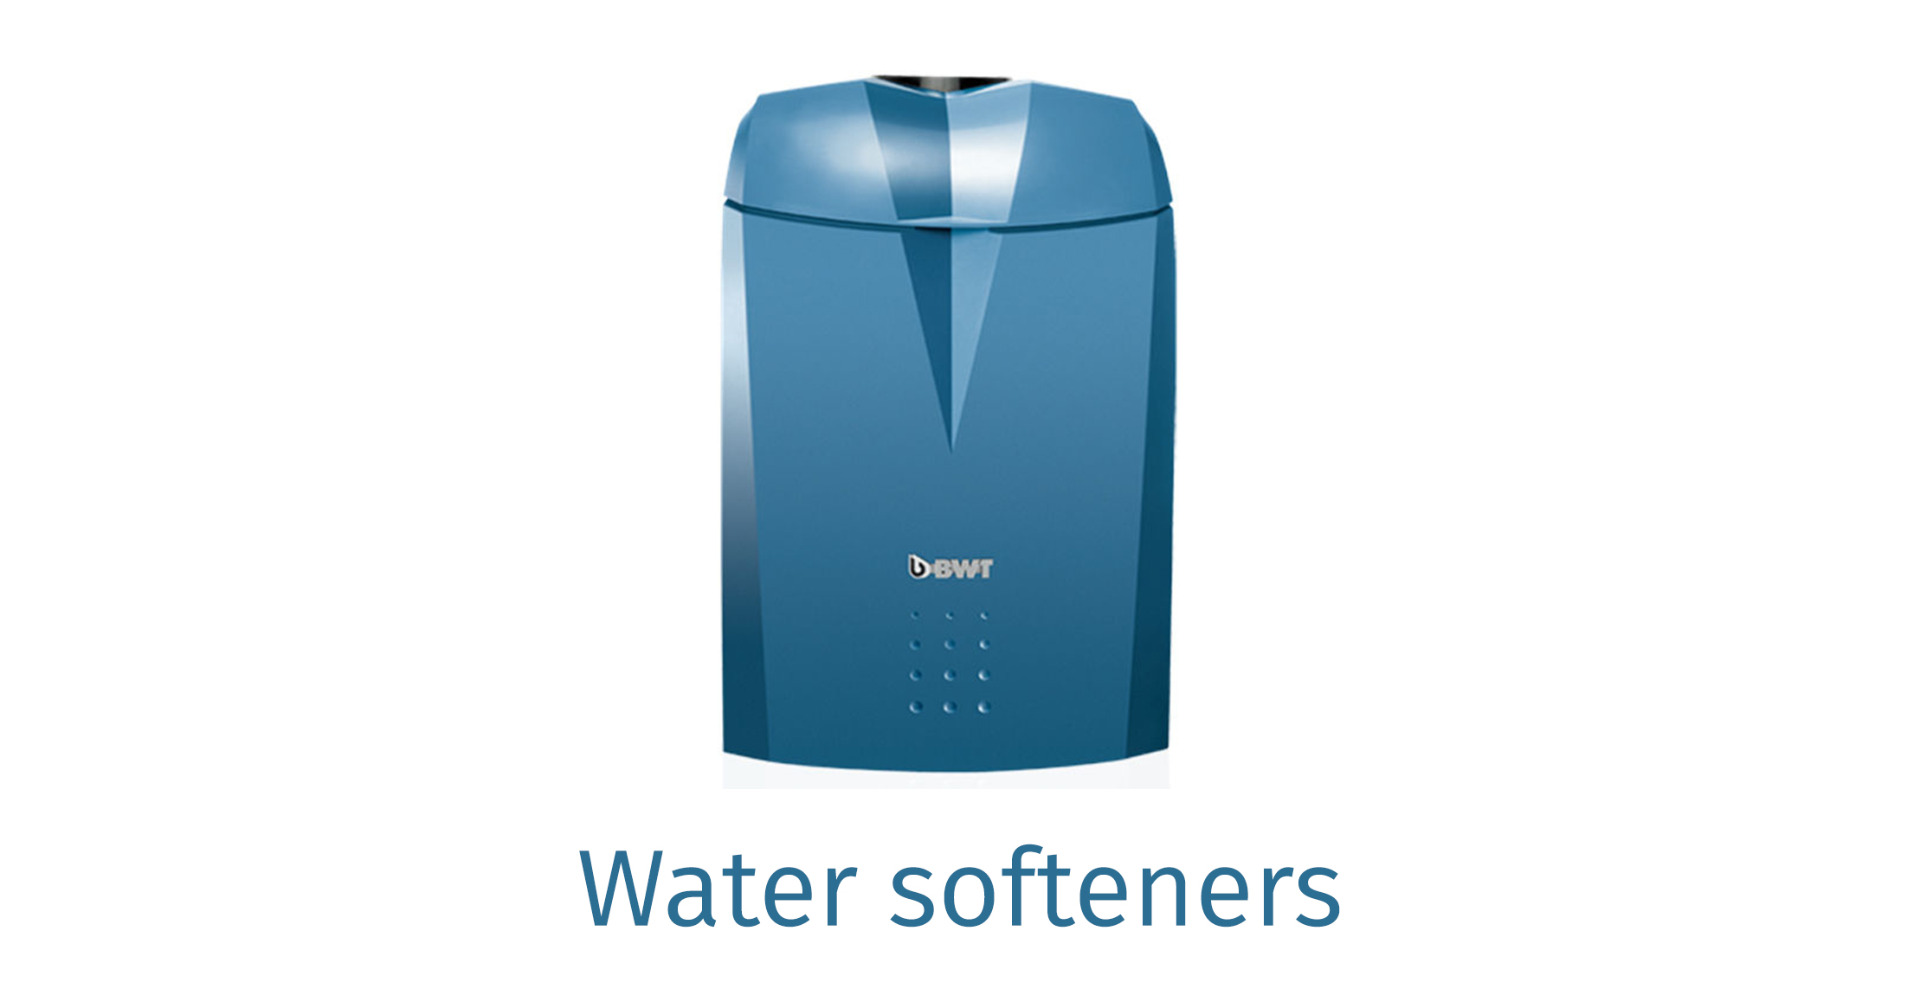 Water softeners